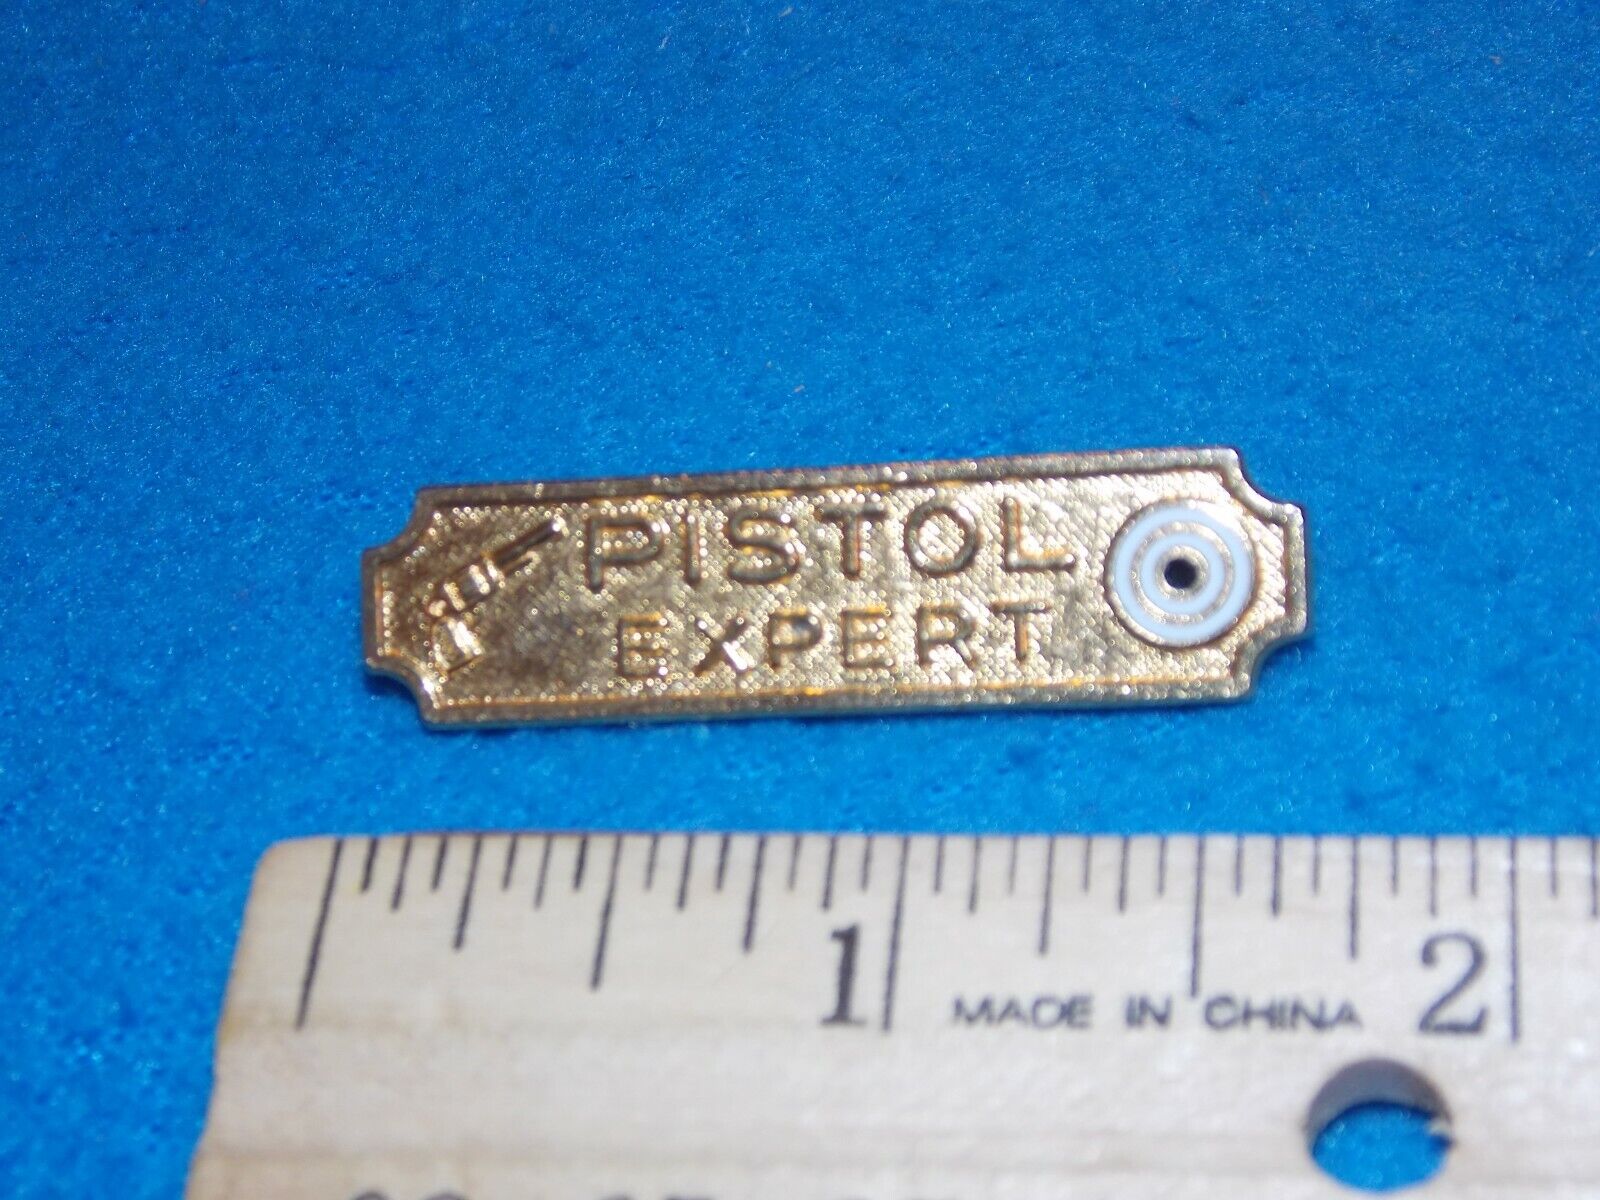 VINTAGE -Pistol Expert GOLD TONE Badge Insignia Pin badge - 1 3/4 INCH 